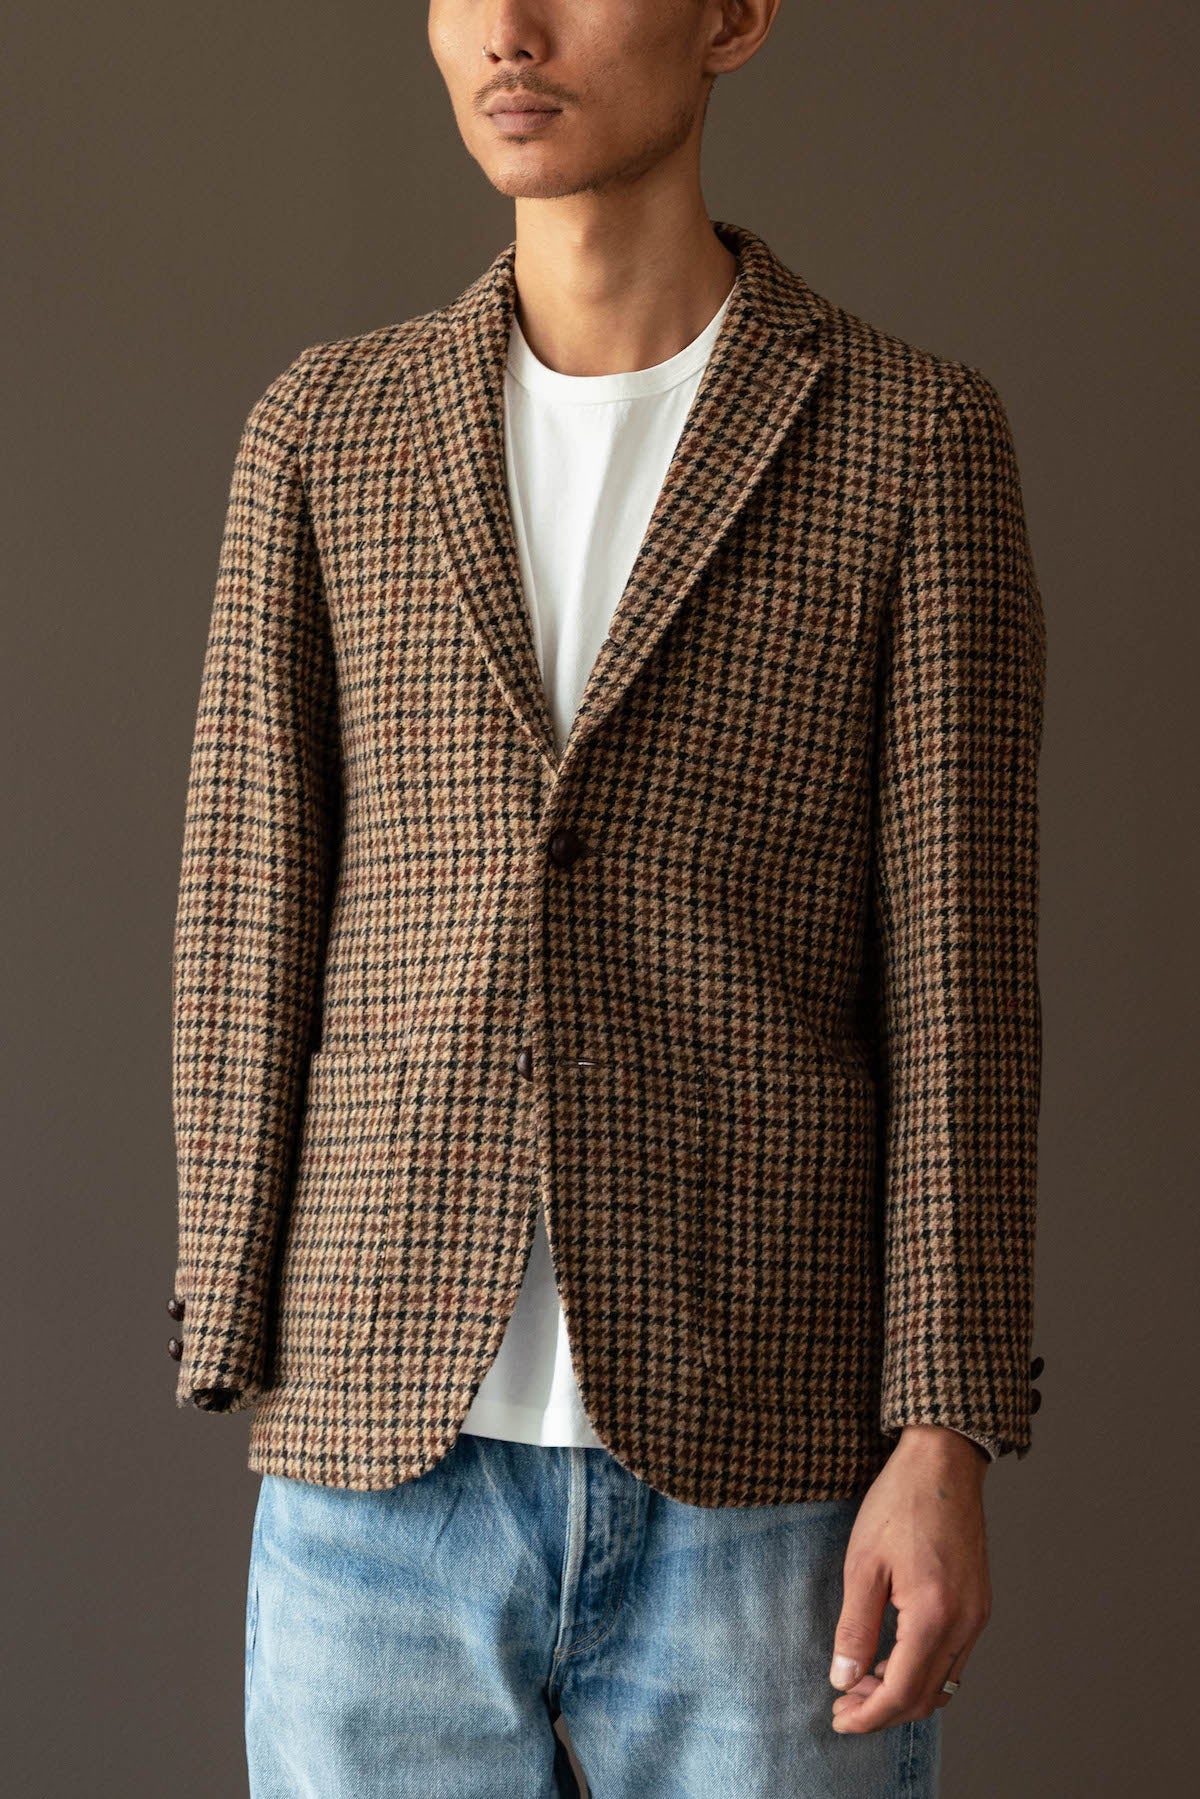 Wallin & Bros Wool Tweed Elbow Patches Plaid Suit Jacket Coat Blazer -  Men's 40R | eBay